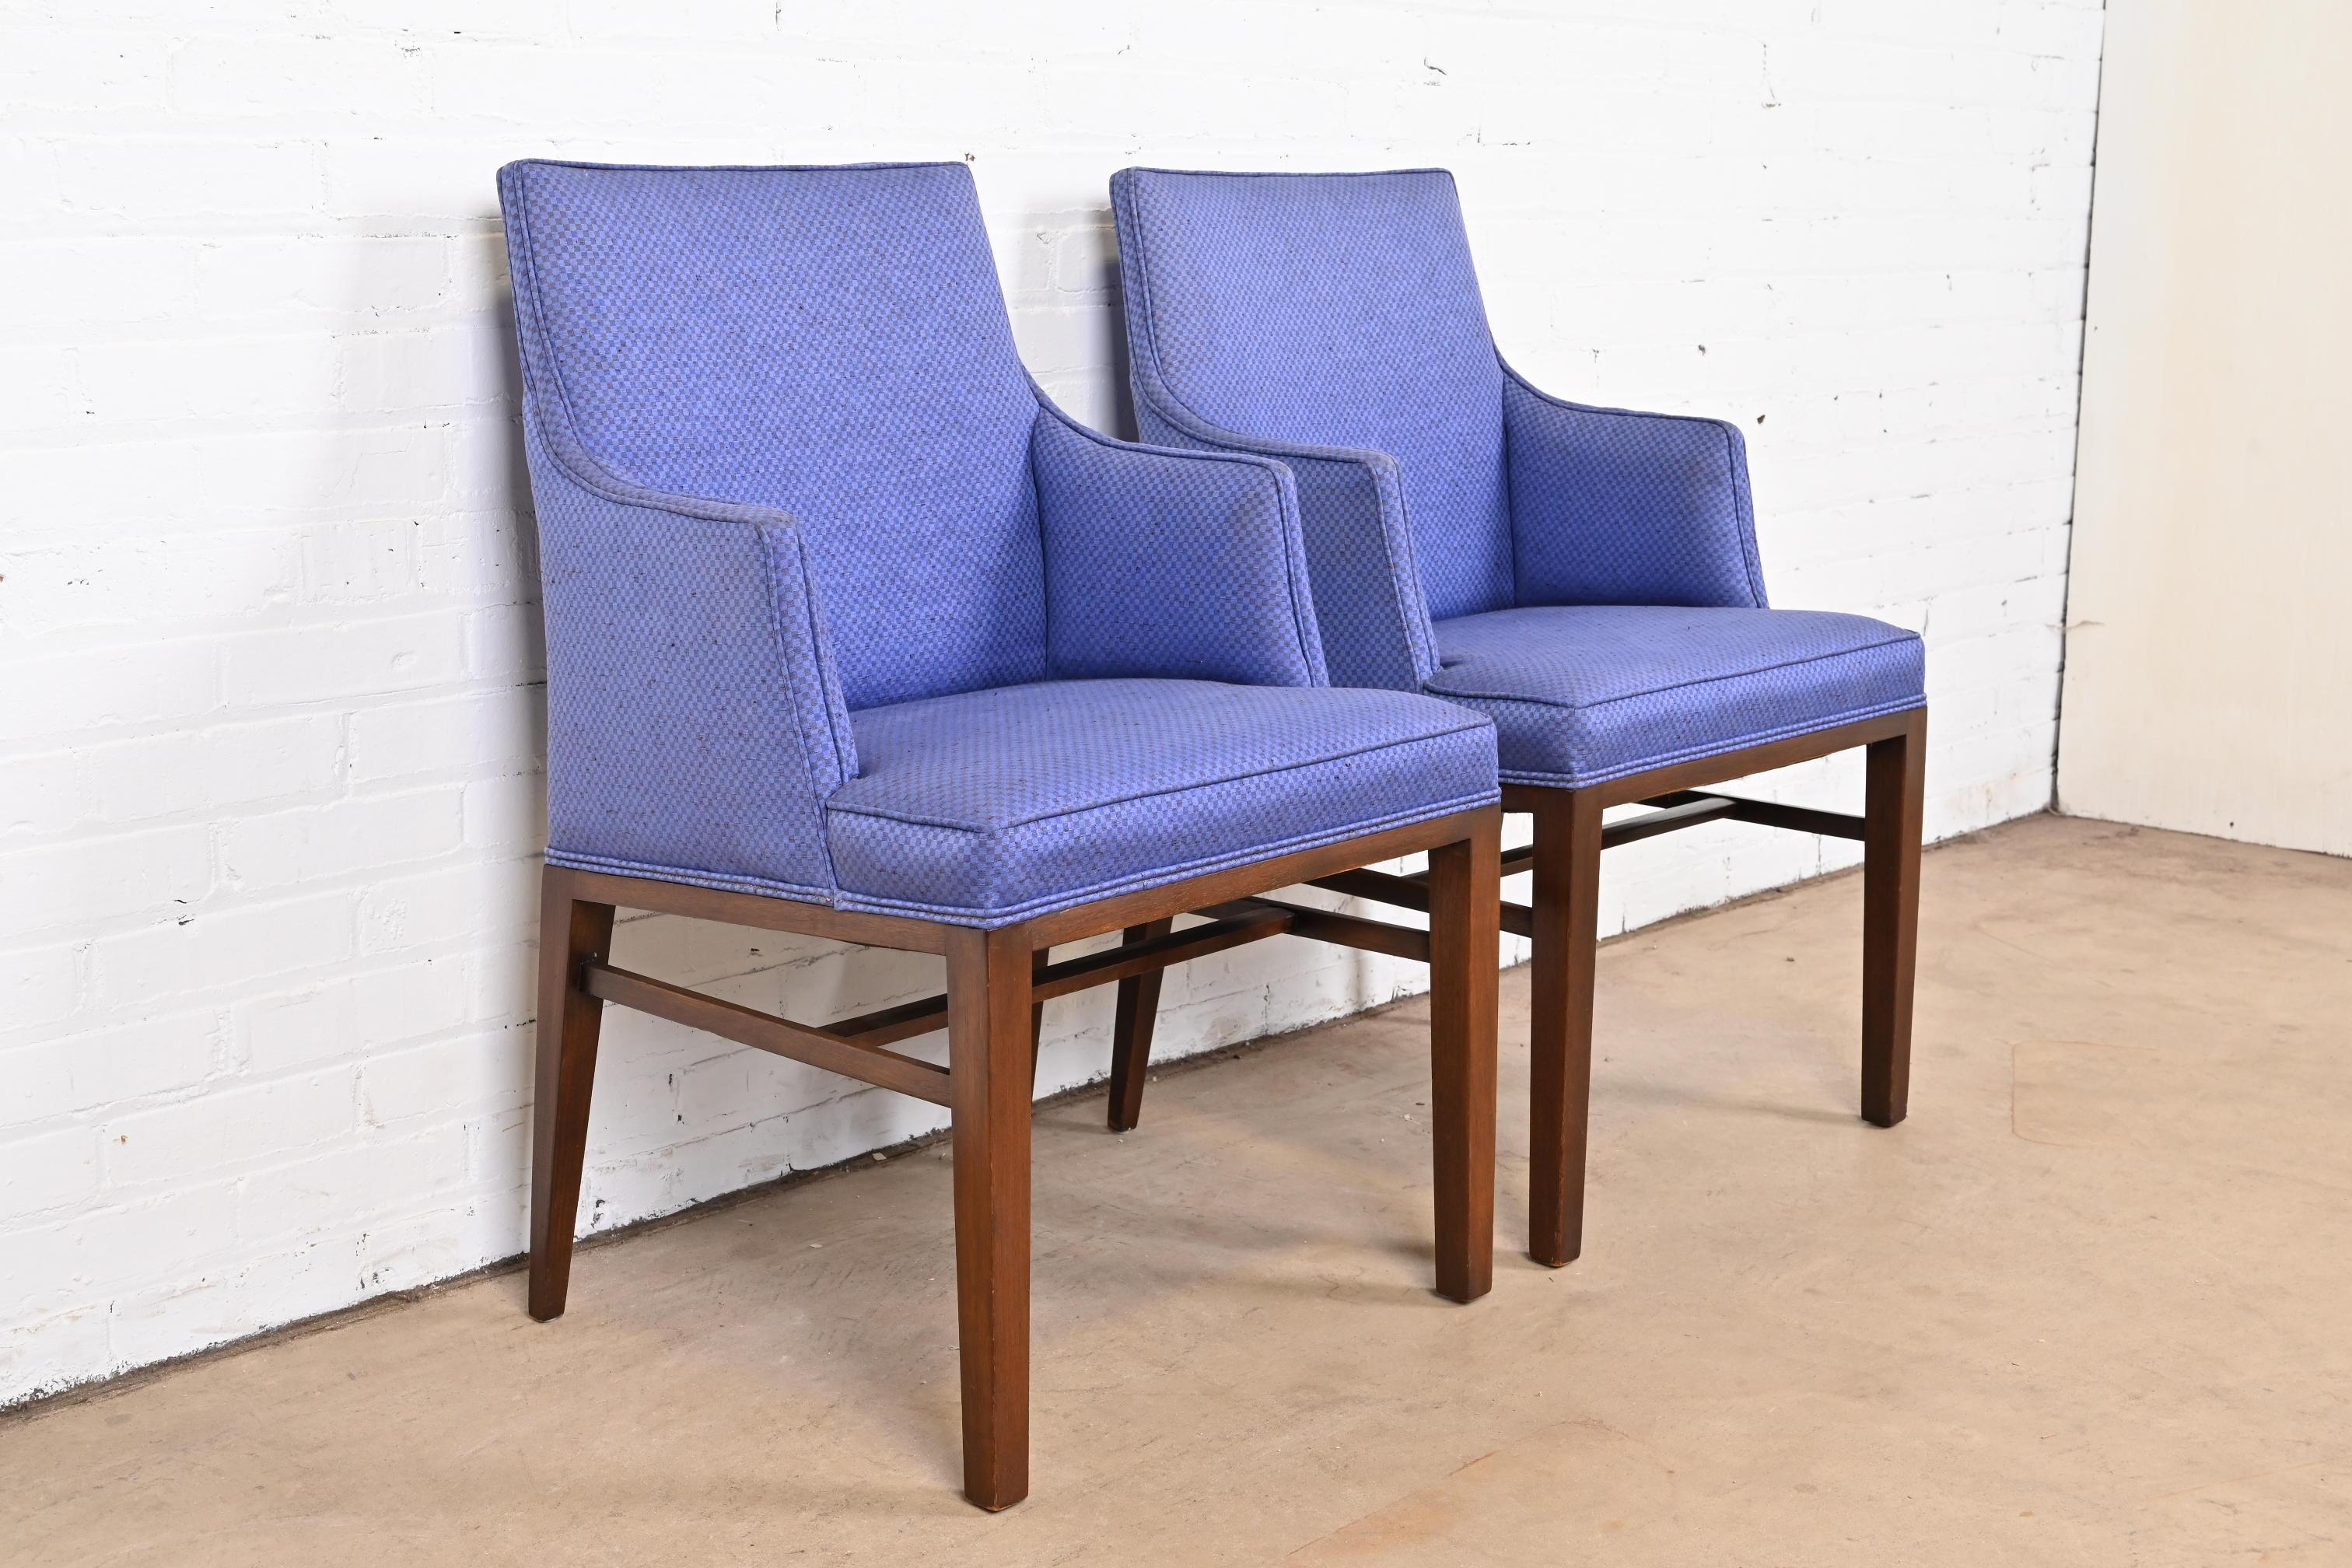 Upholstery Edward Wormley for Dunbar Mid-Century Modern Arm Chairs, Pair